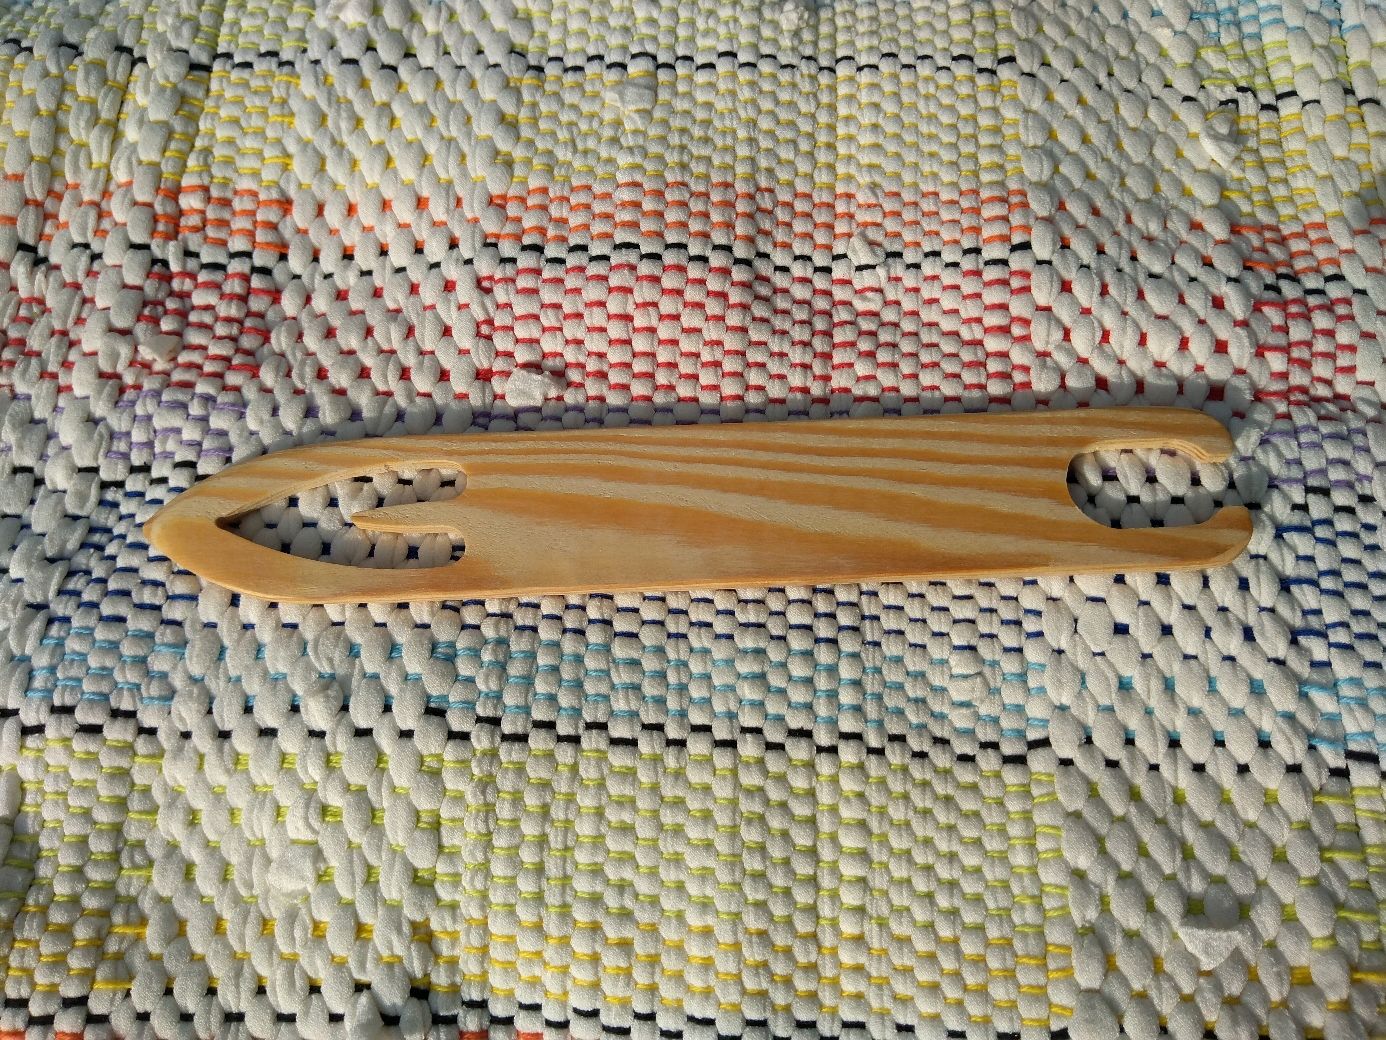 Челнок для вязания гамака